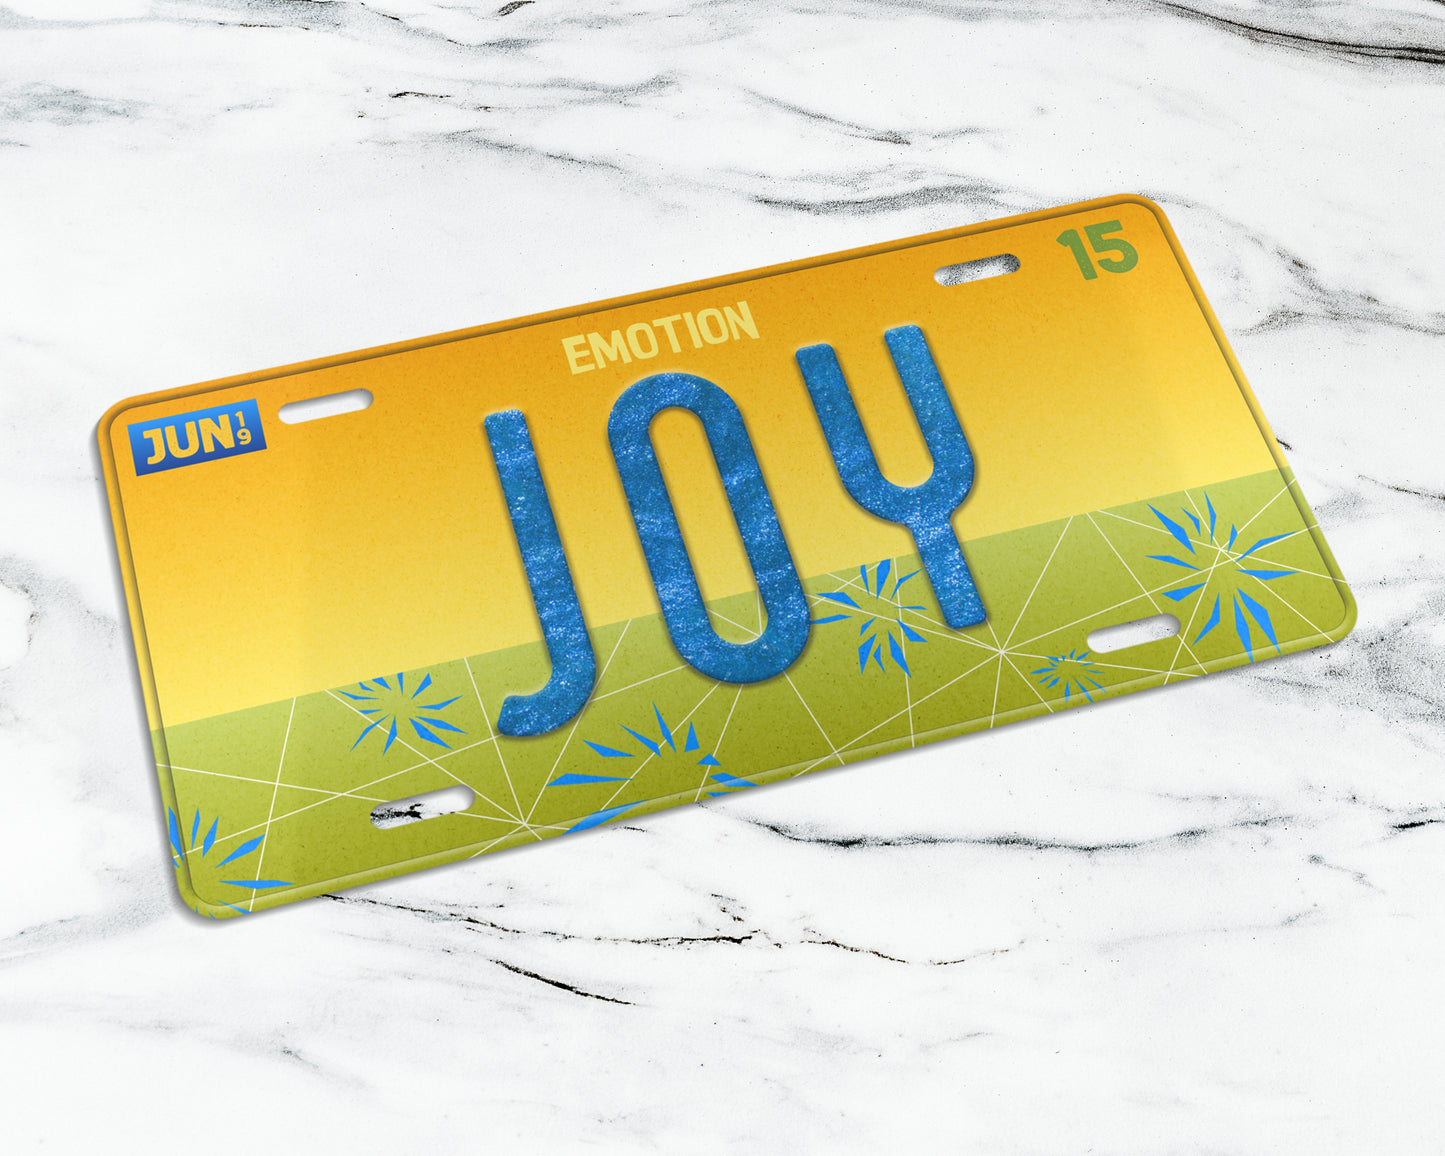 Joy emotion license plate